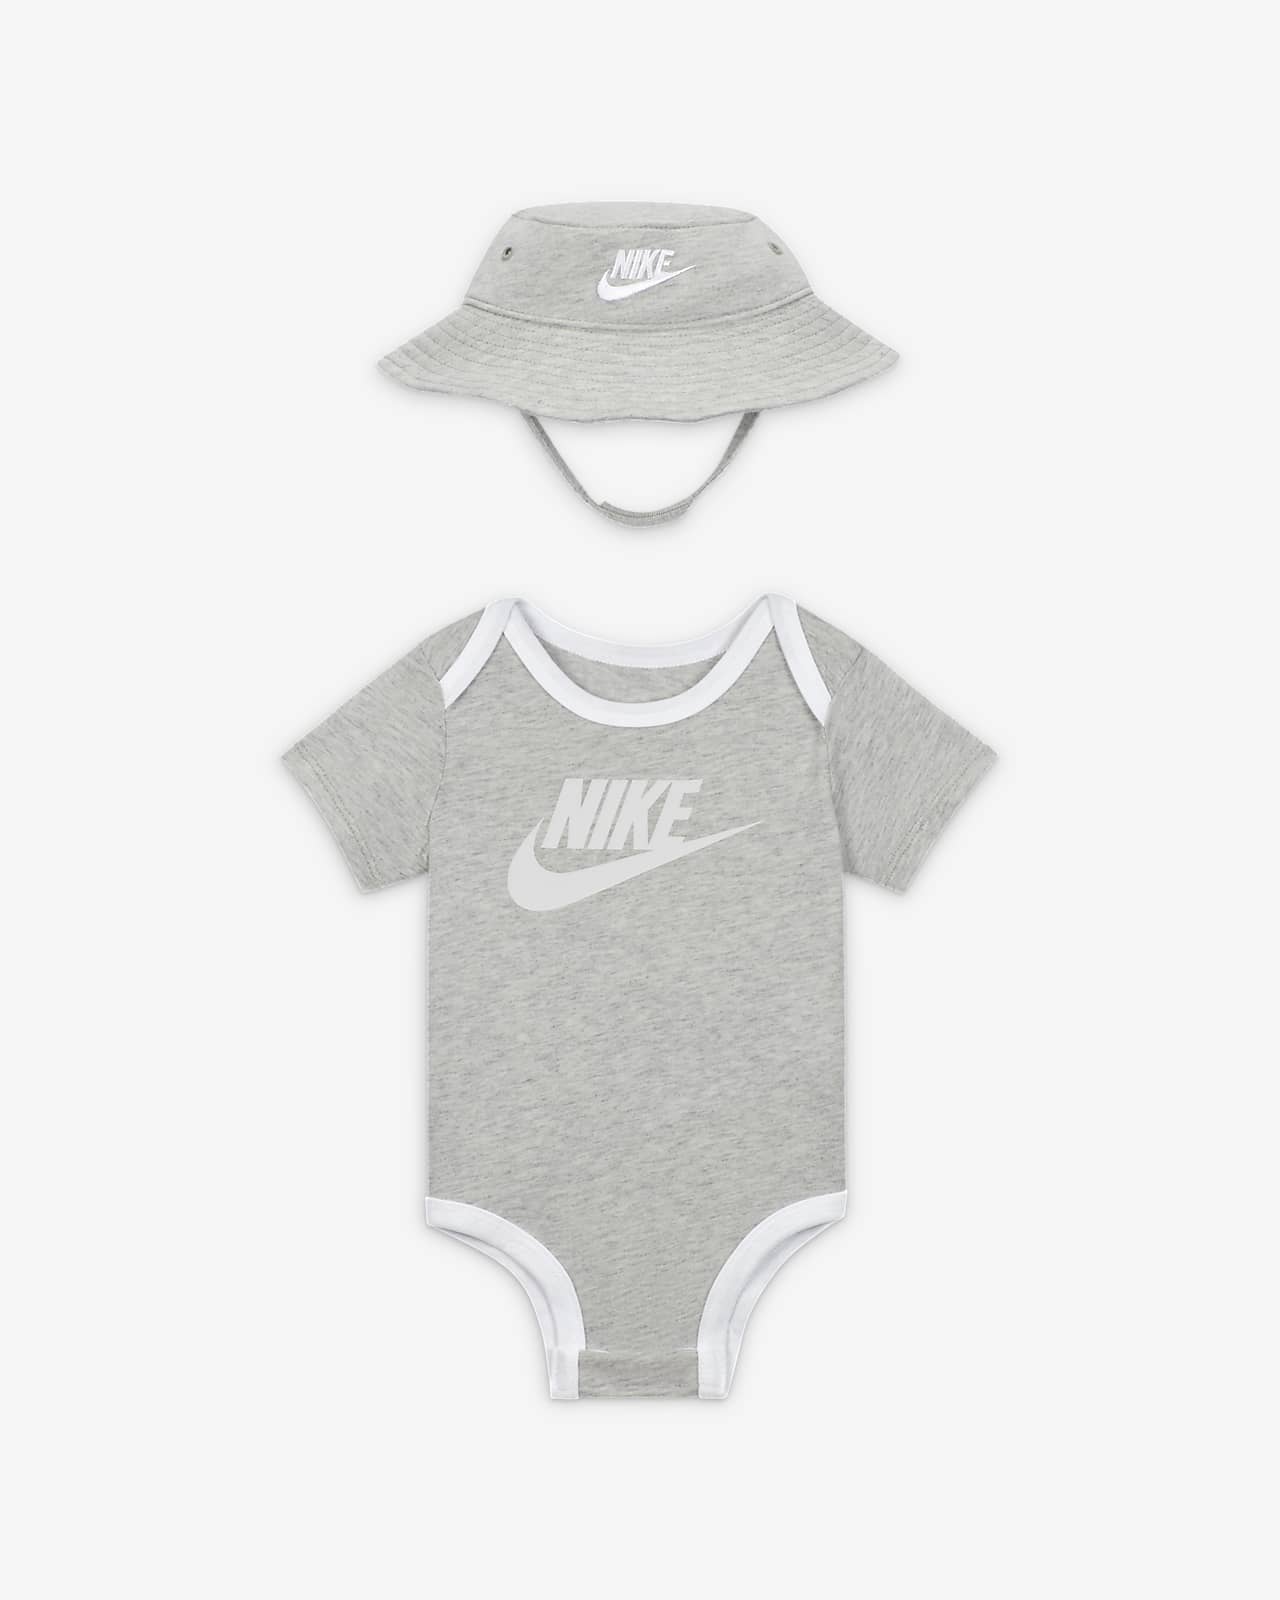 Nike Baby Set con Bob y Body Surtido White/Black